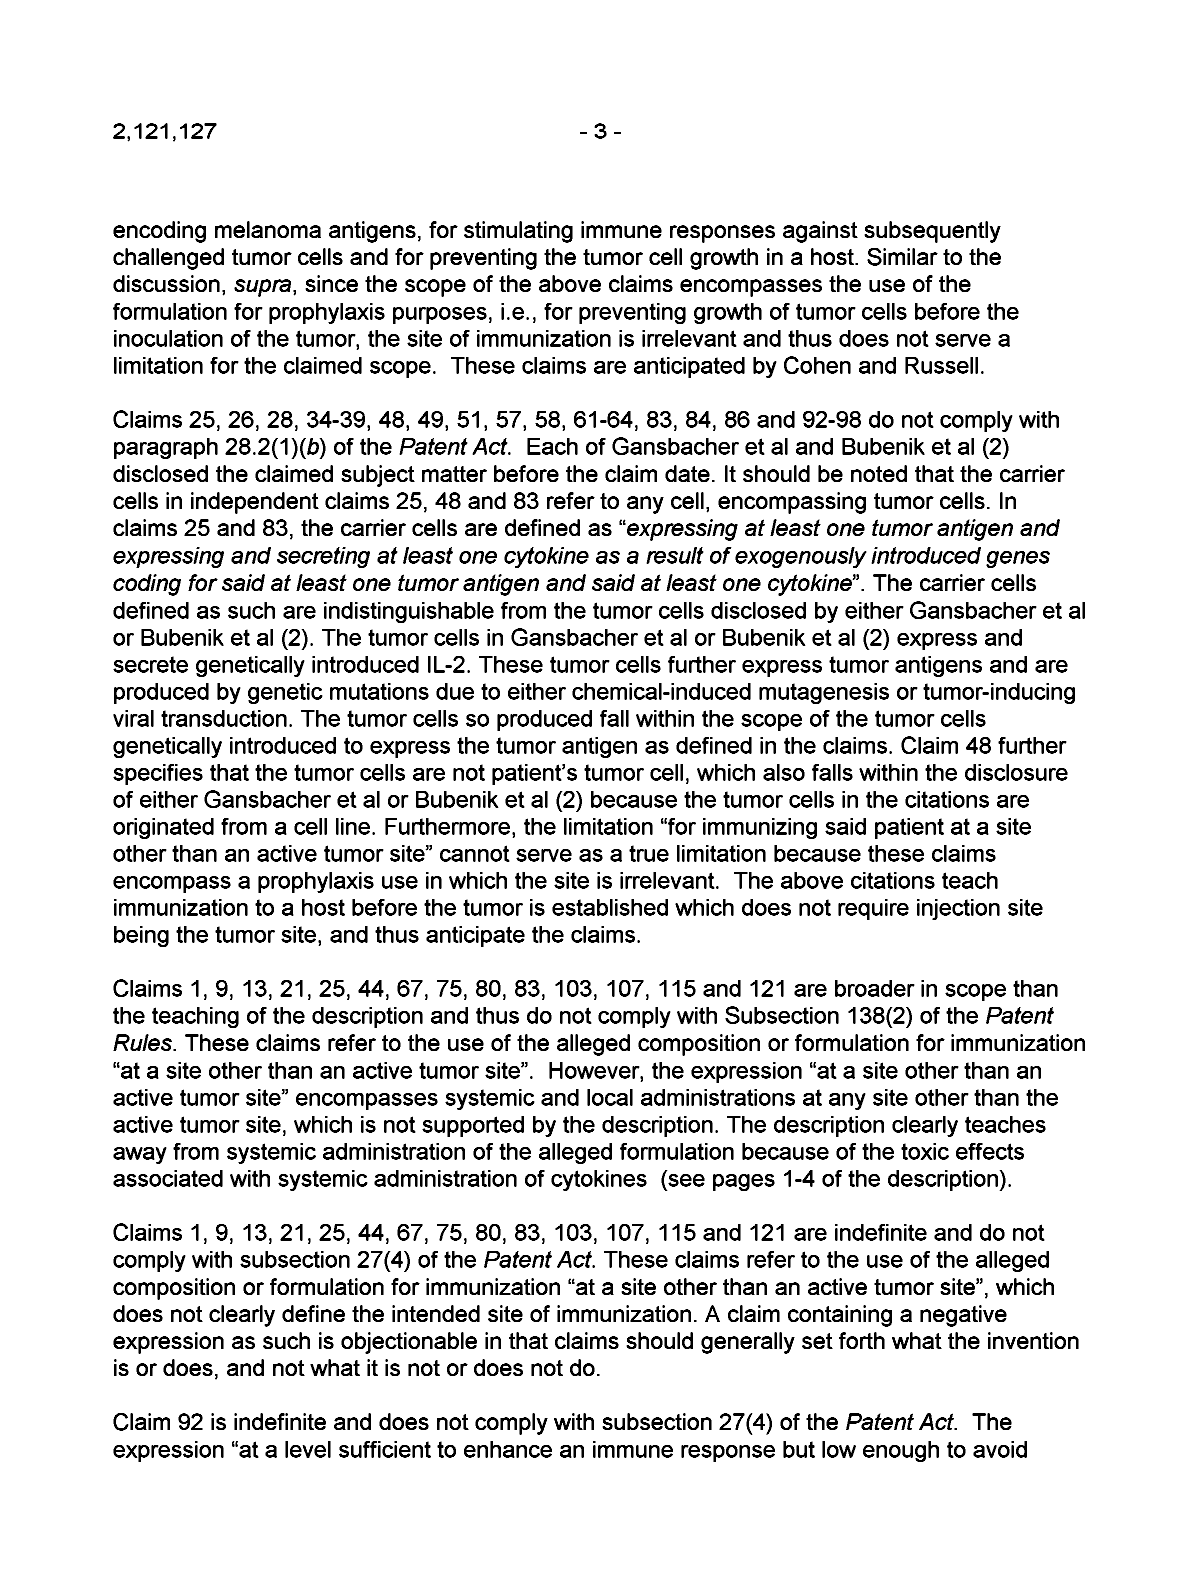 Canadian Patent Document 2121127. Prosecution-Amendment 20071229. Image 3 of 4